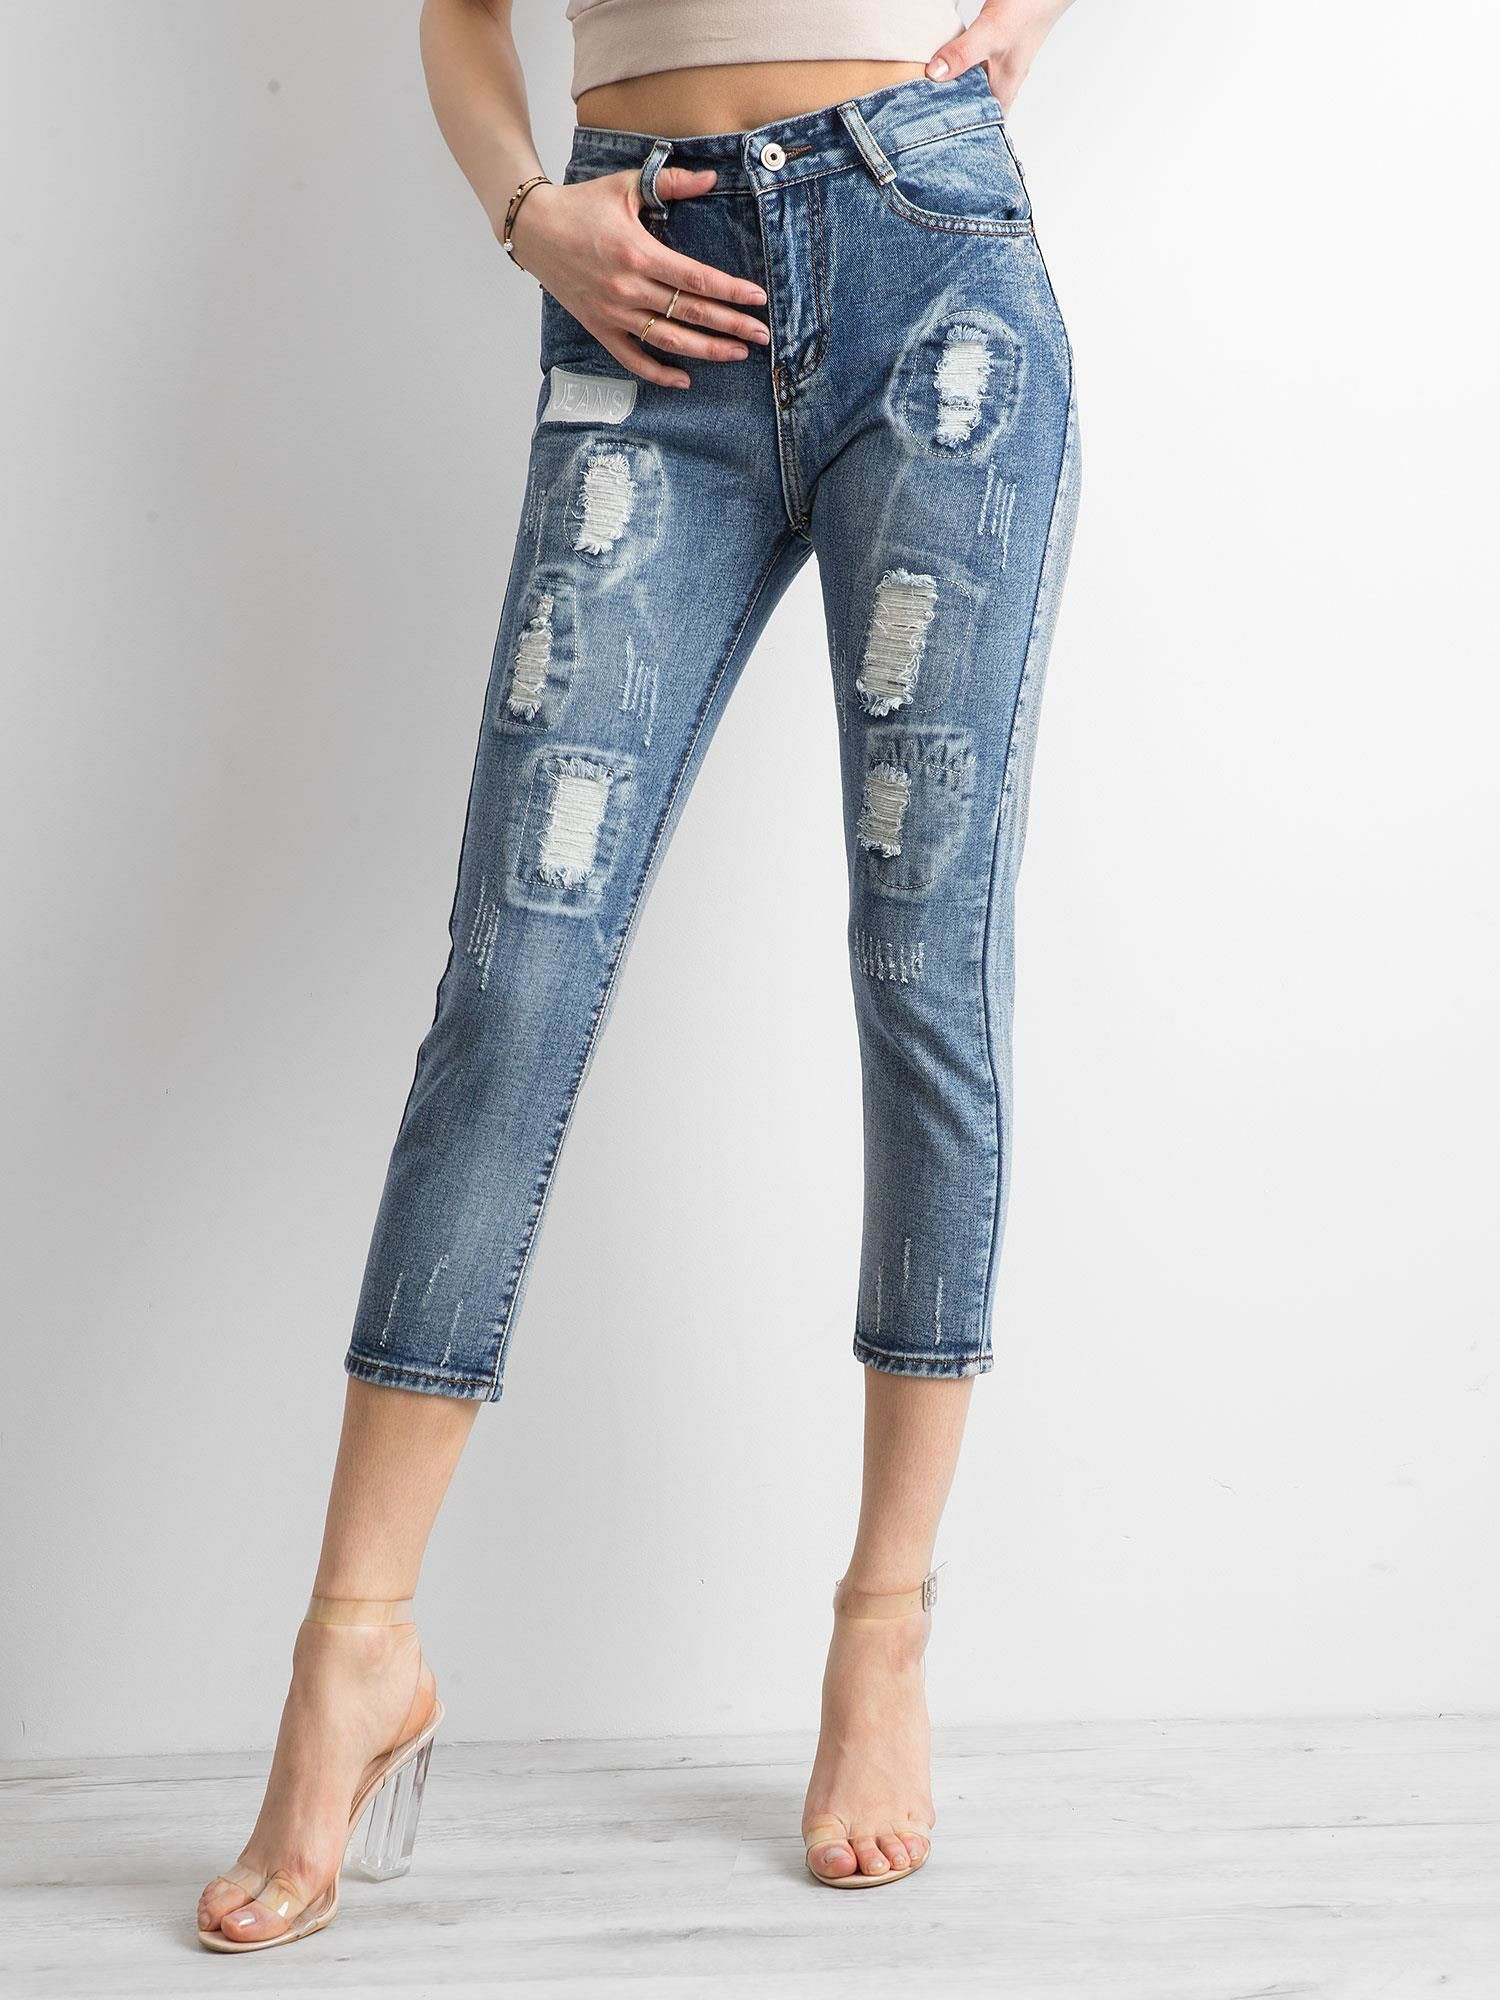 Kalhoty JMP SP CHK001 jeans.81 modrá 26